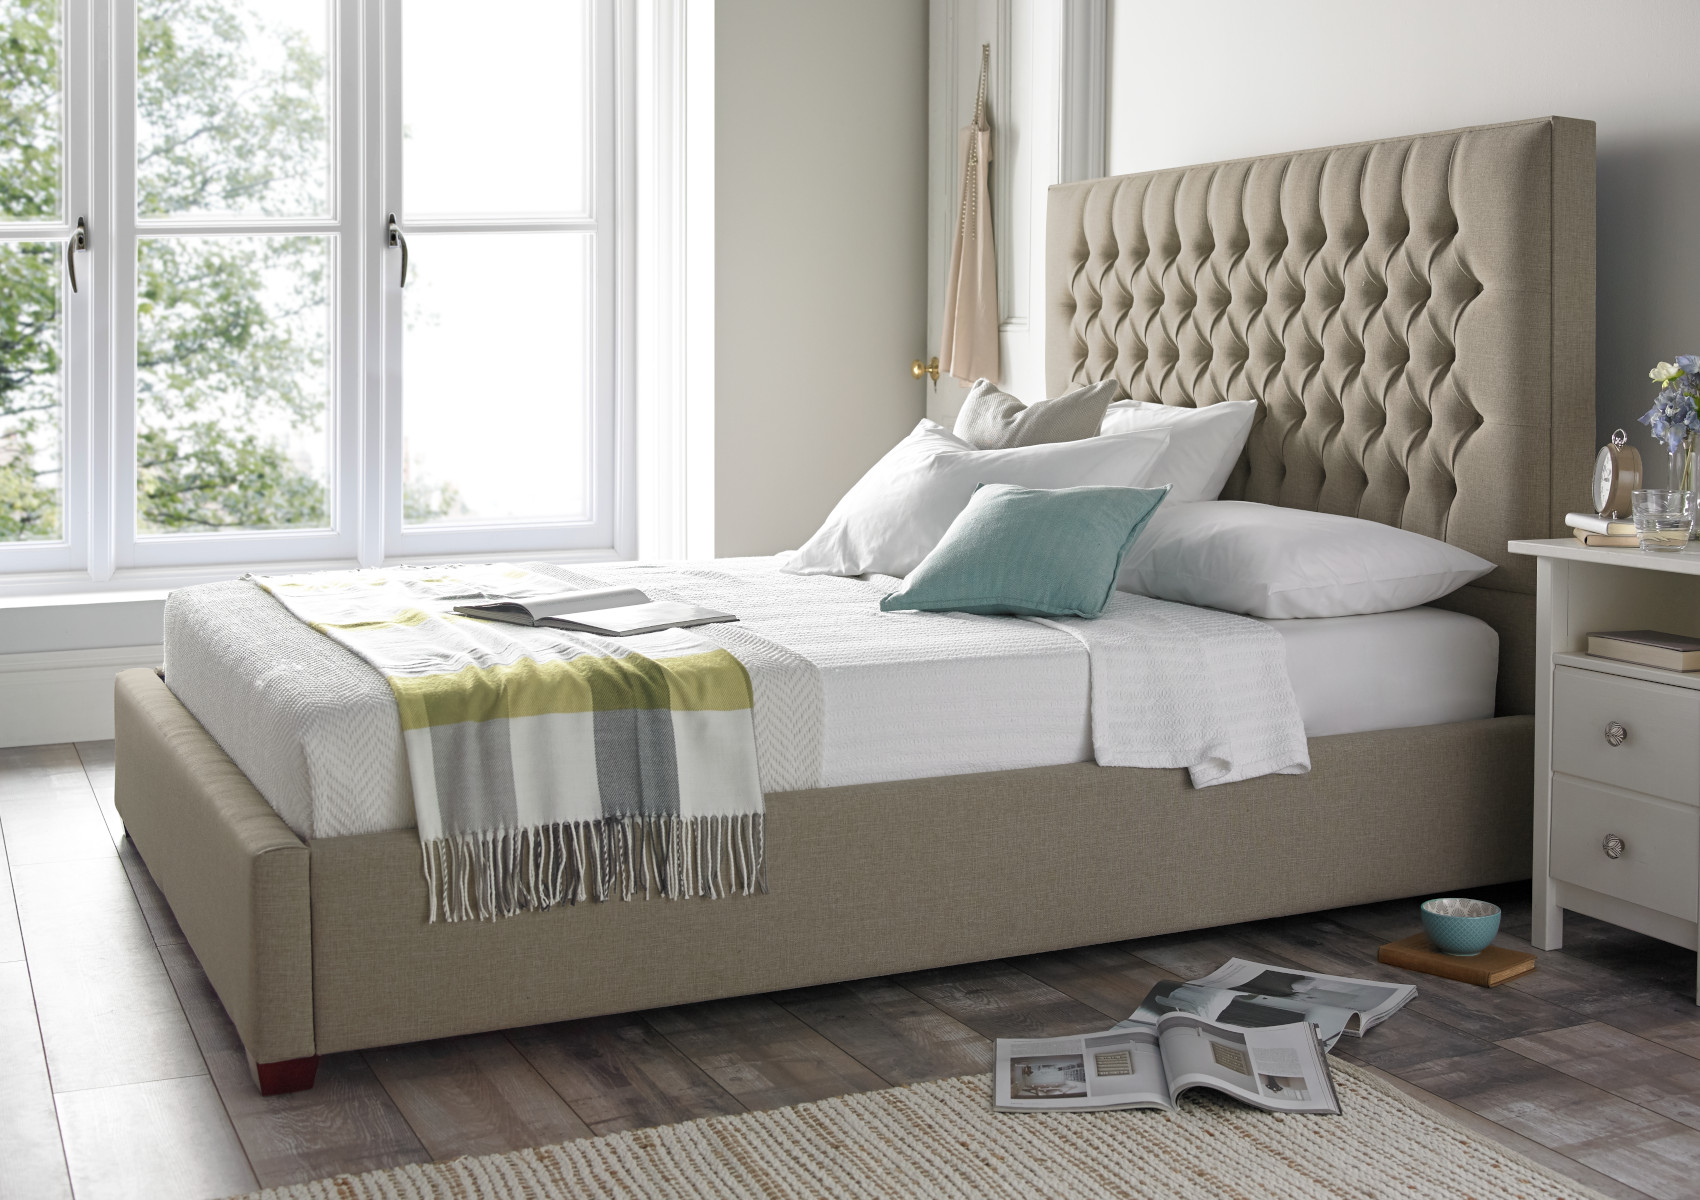 View Belgravia Shetland Mercury Upholstered Compact Double Bed Time4Sleep information